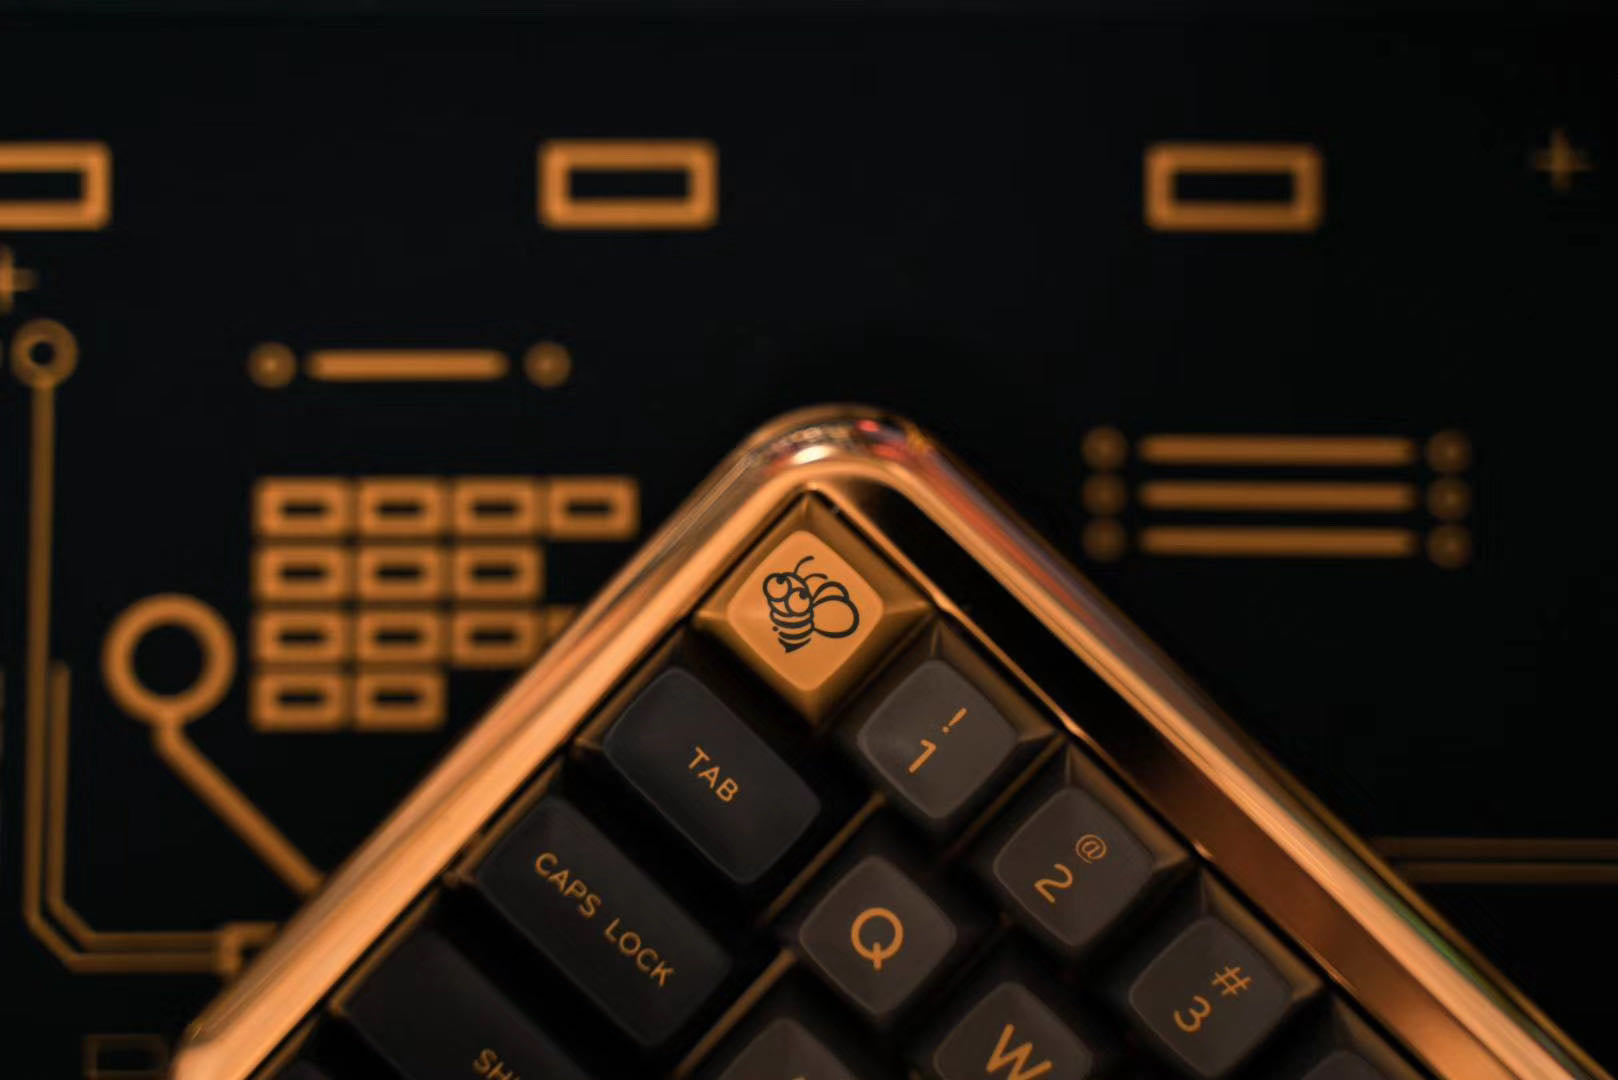 MelGeek Mojo60 Brass Mechanical Keyboard Case 60% Keyboard Chasis